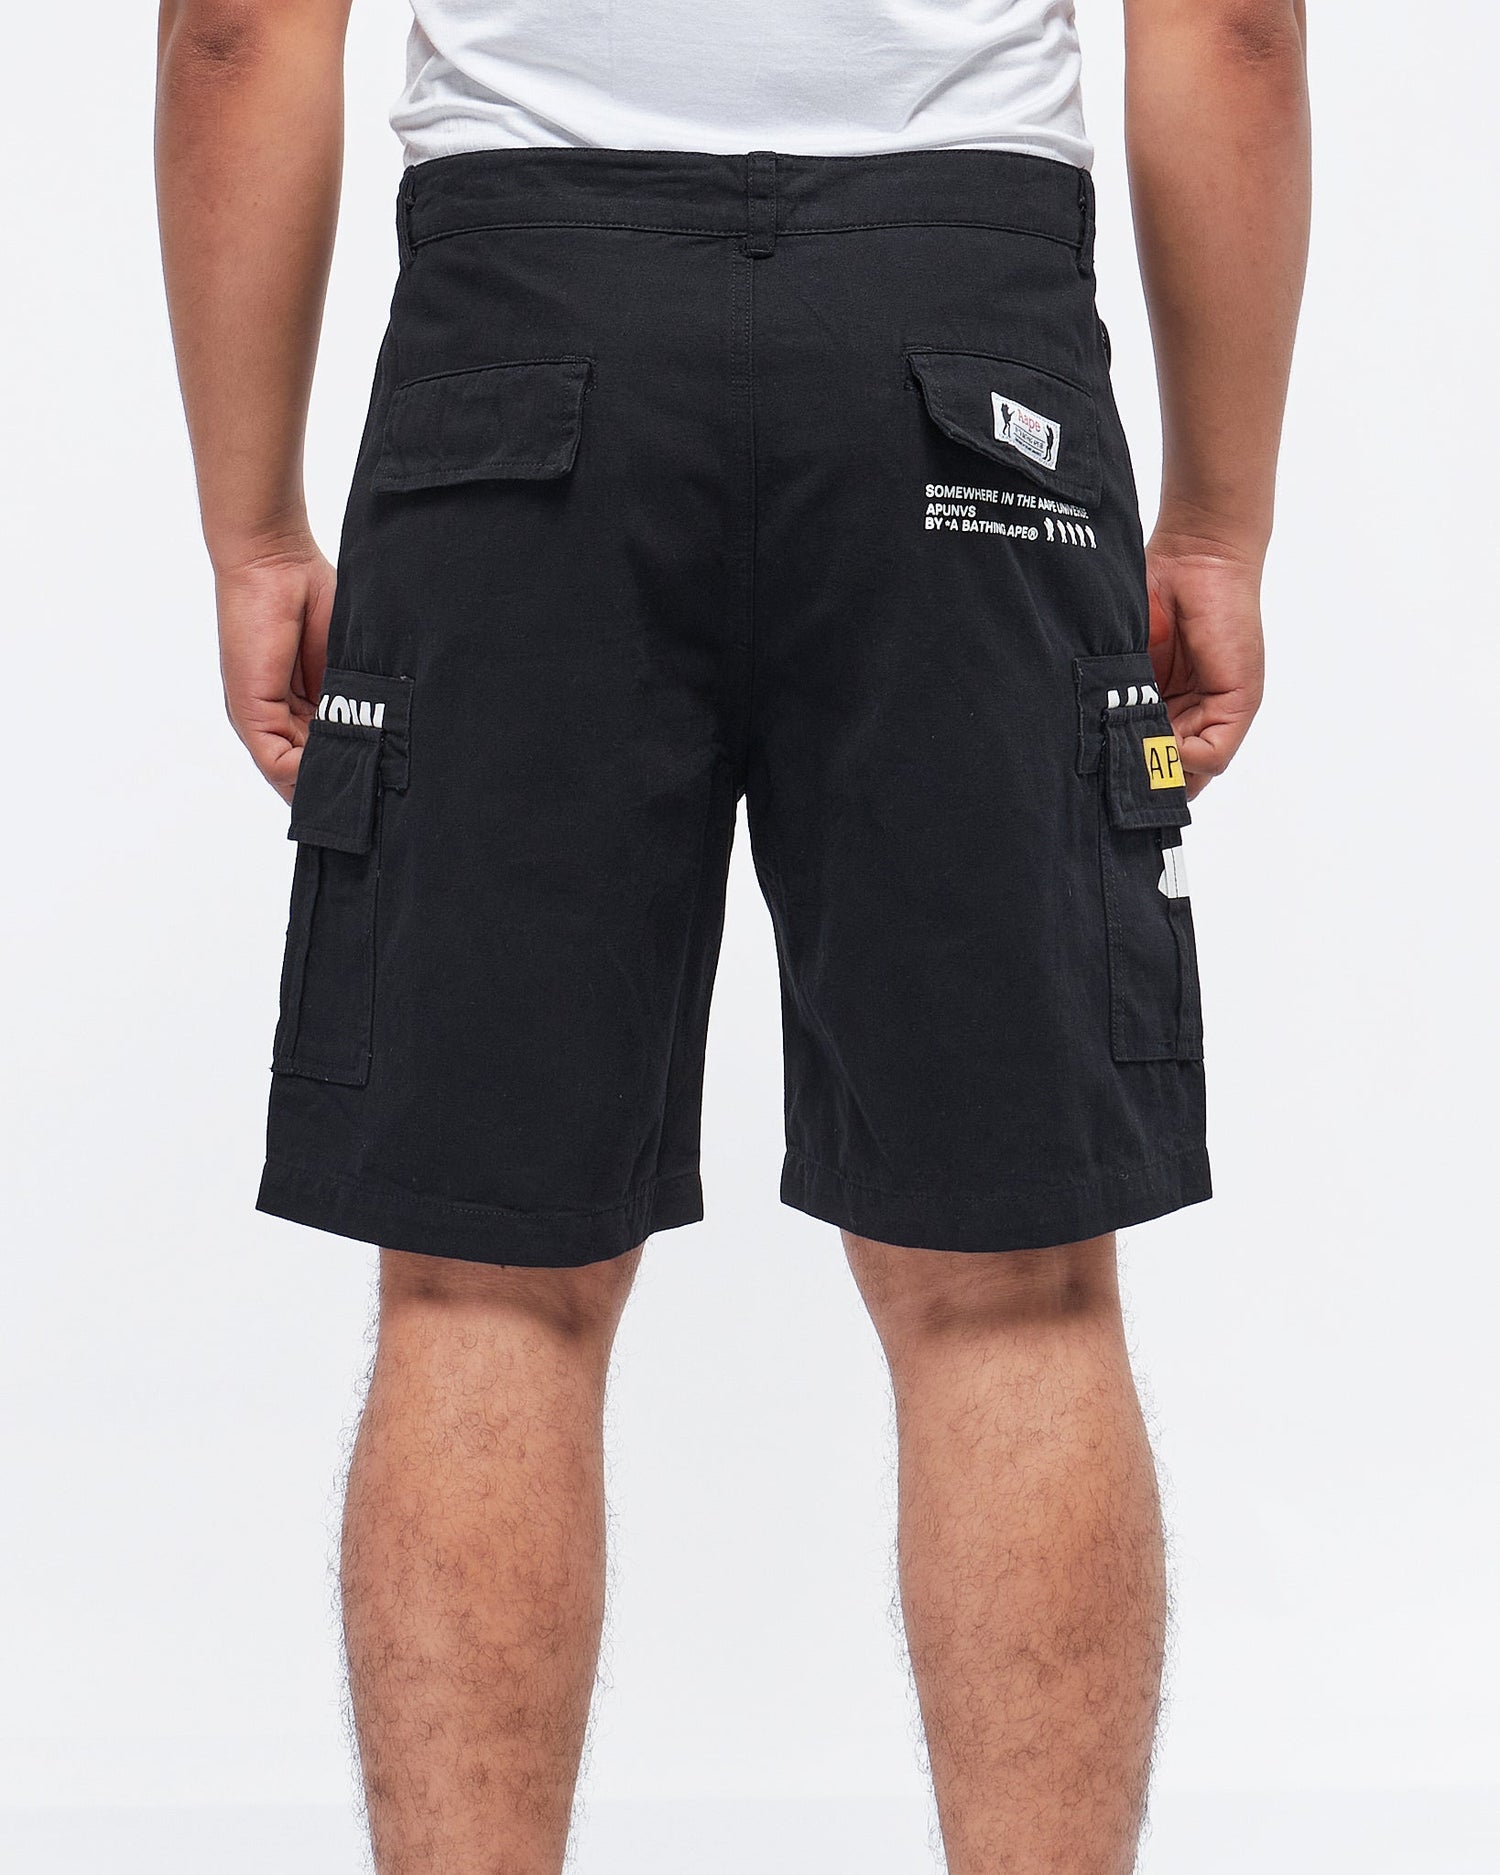 MOI OUTFIT-Side Pocket Men Shorts 29.90